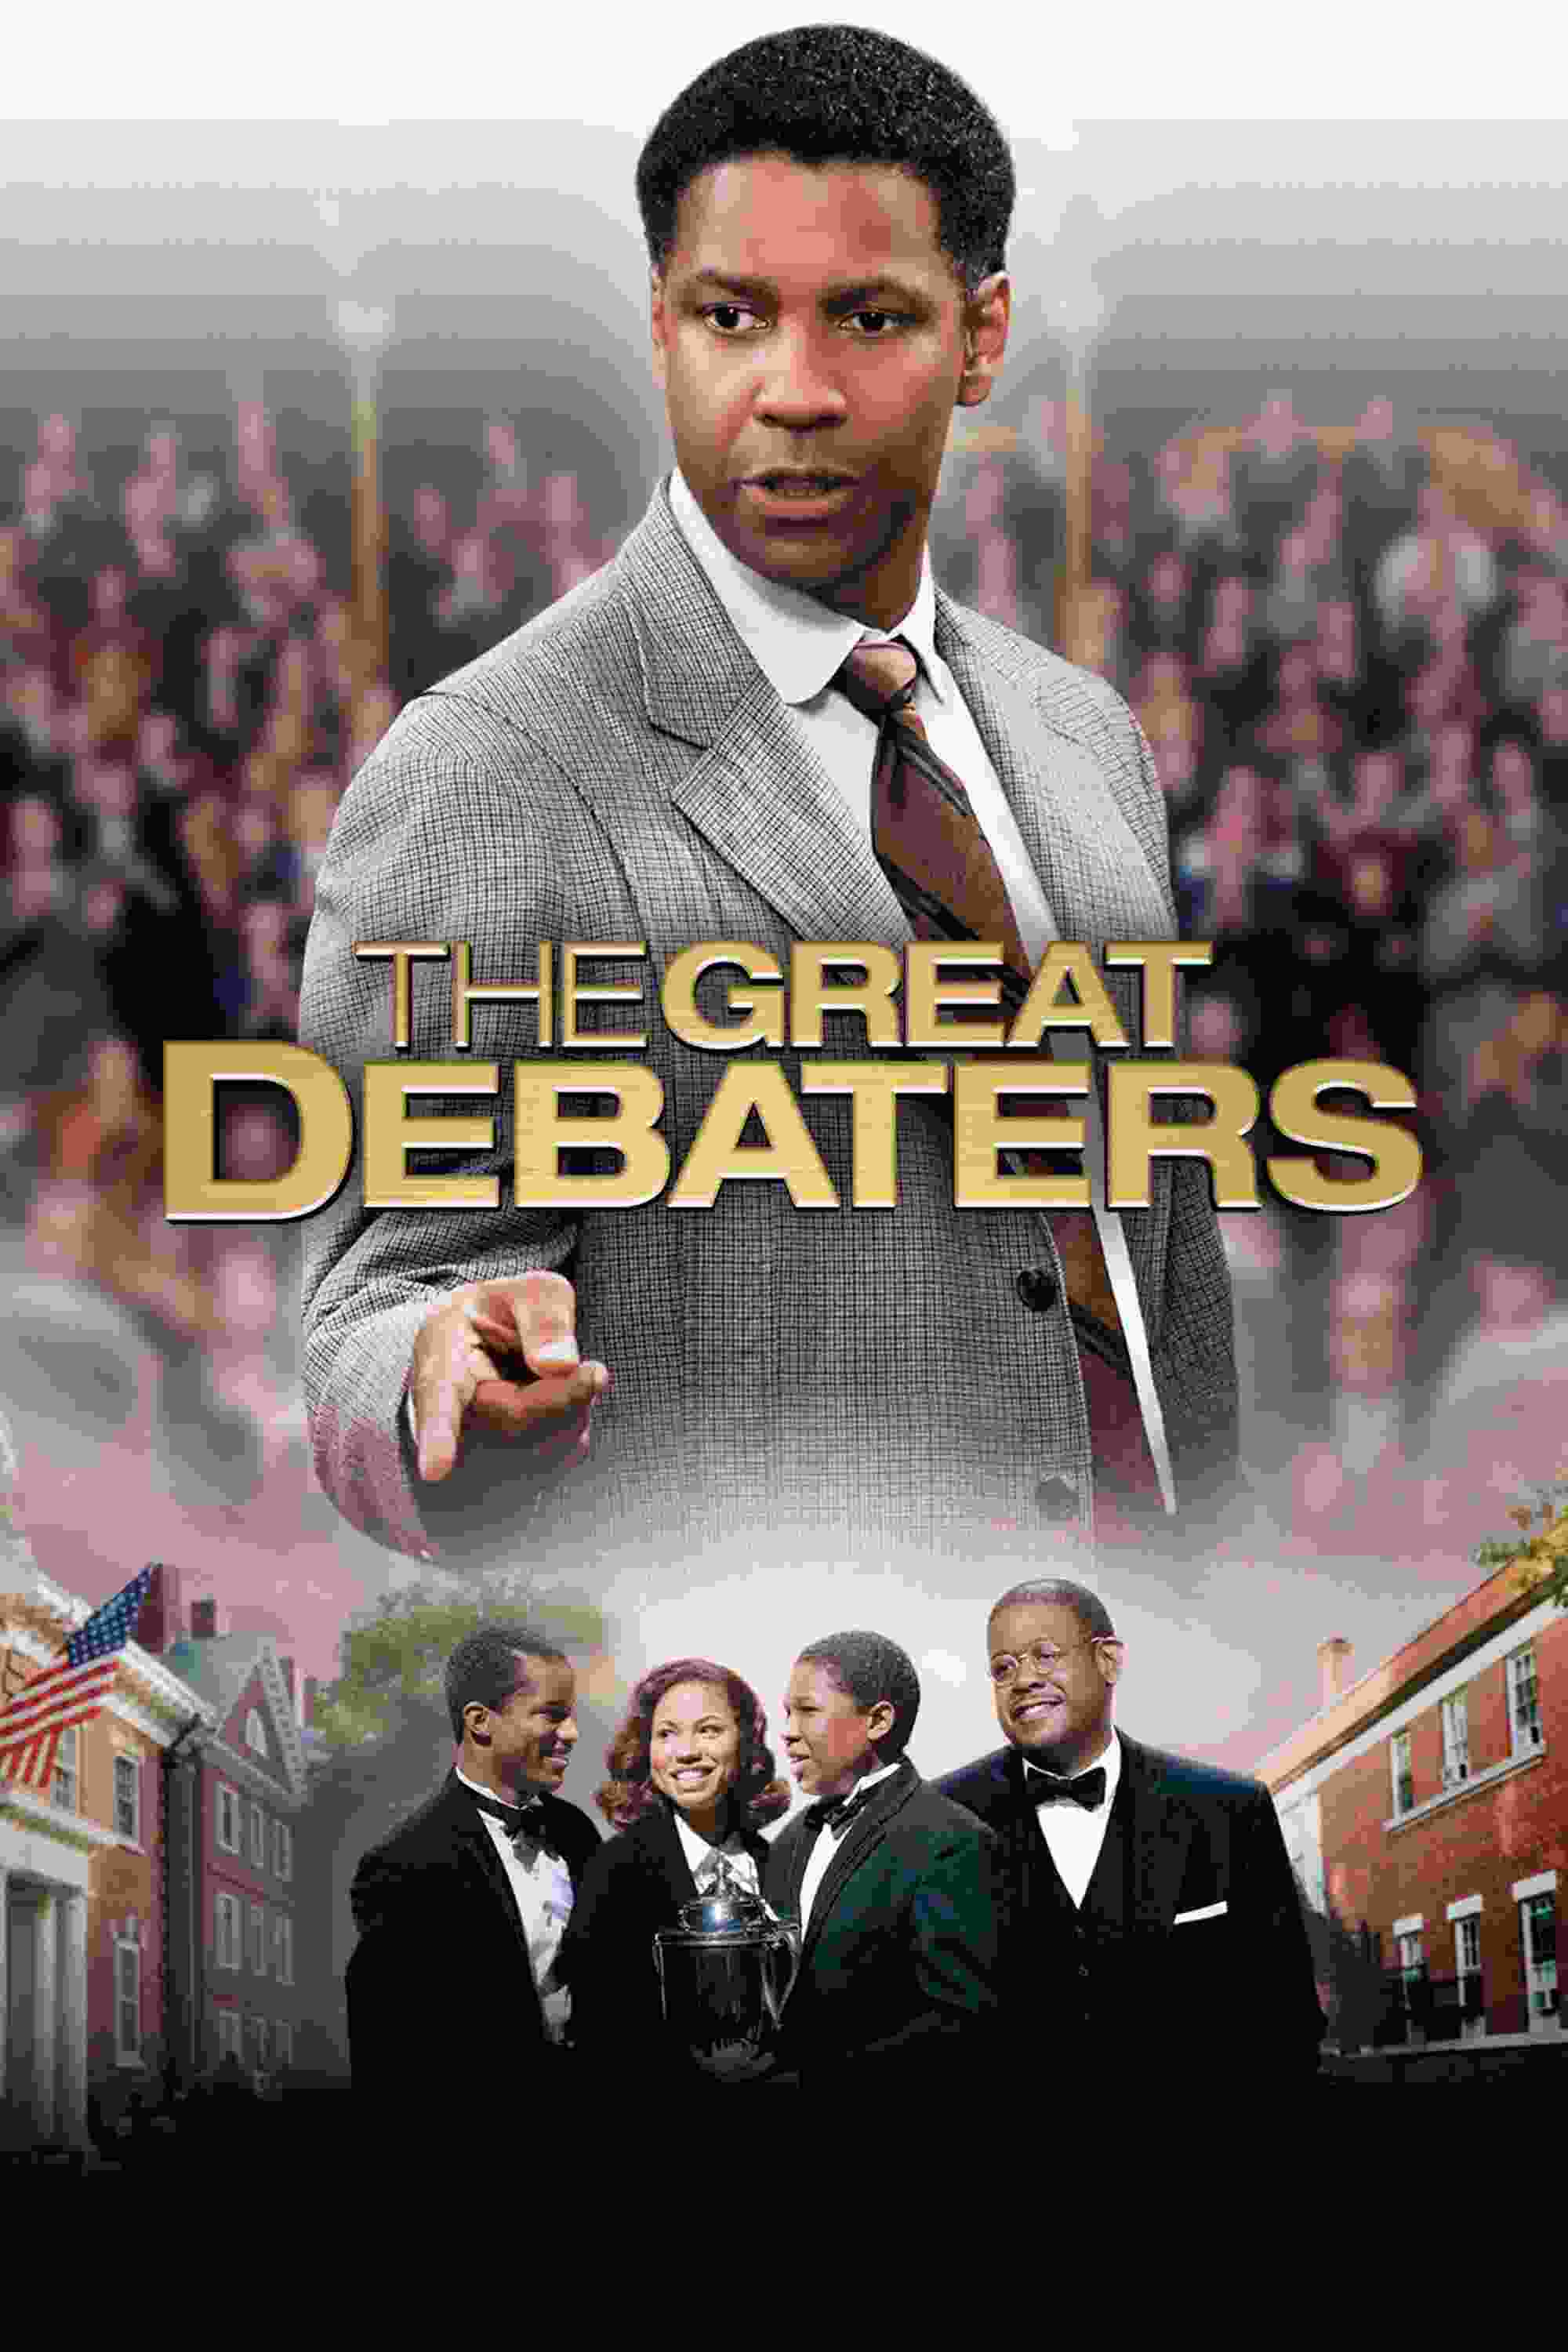 The Great Debaters (2007) Denzel Washington